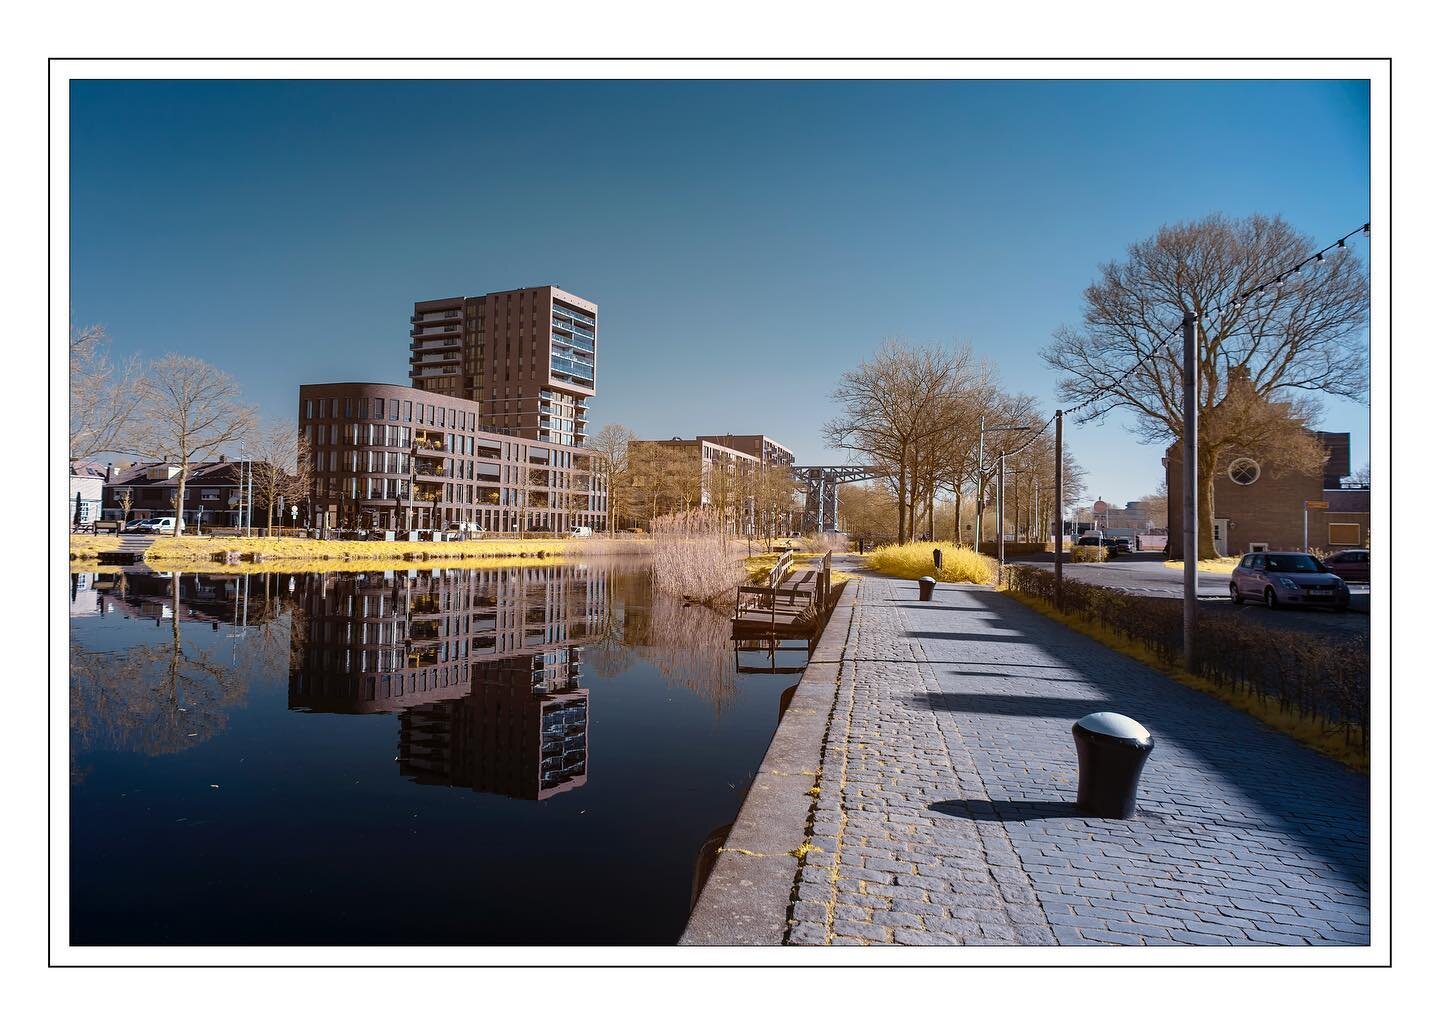 Full conversion infrared nikon D610 camera with 590Nm filter. 
Piushaven, Tilburg, Netherlands.
.
.
.
.
.
.

#tilburg #infrarednikon #NoordBrabant #Netherlands
#netherlands #infrared #ir #590 #590nm #fullconversion #conversion #infraredconvertedcamer